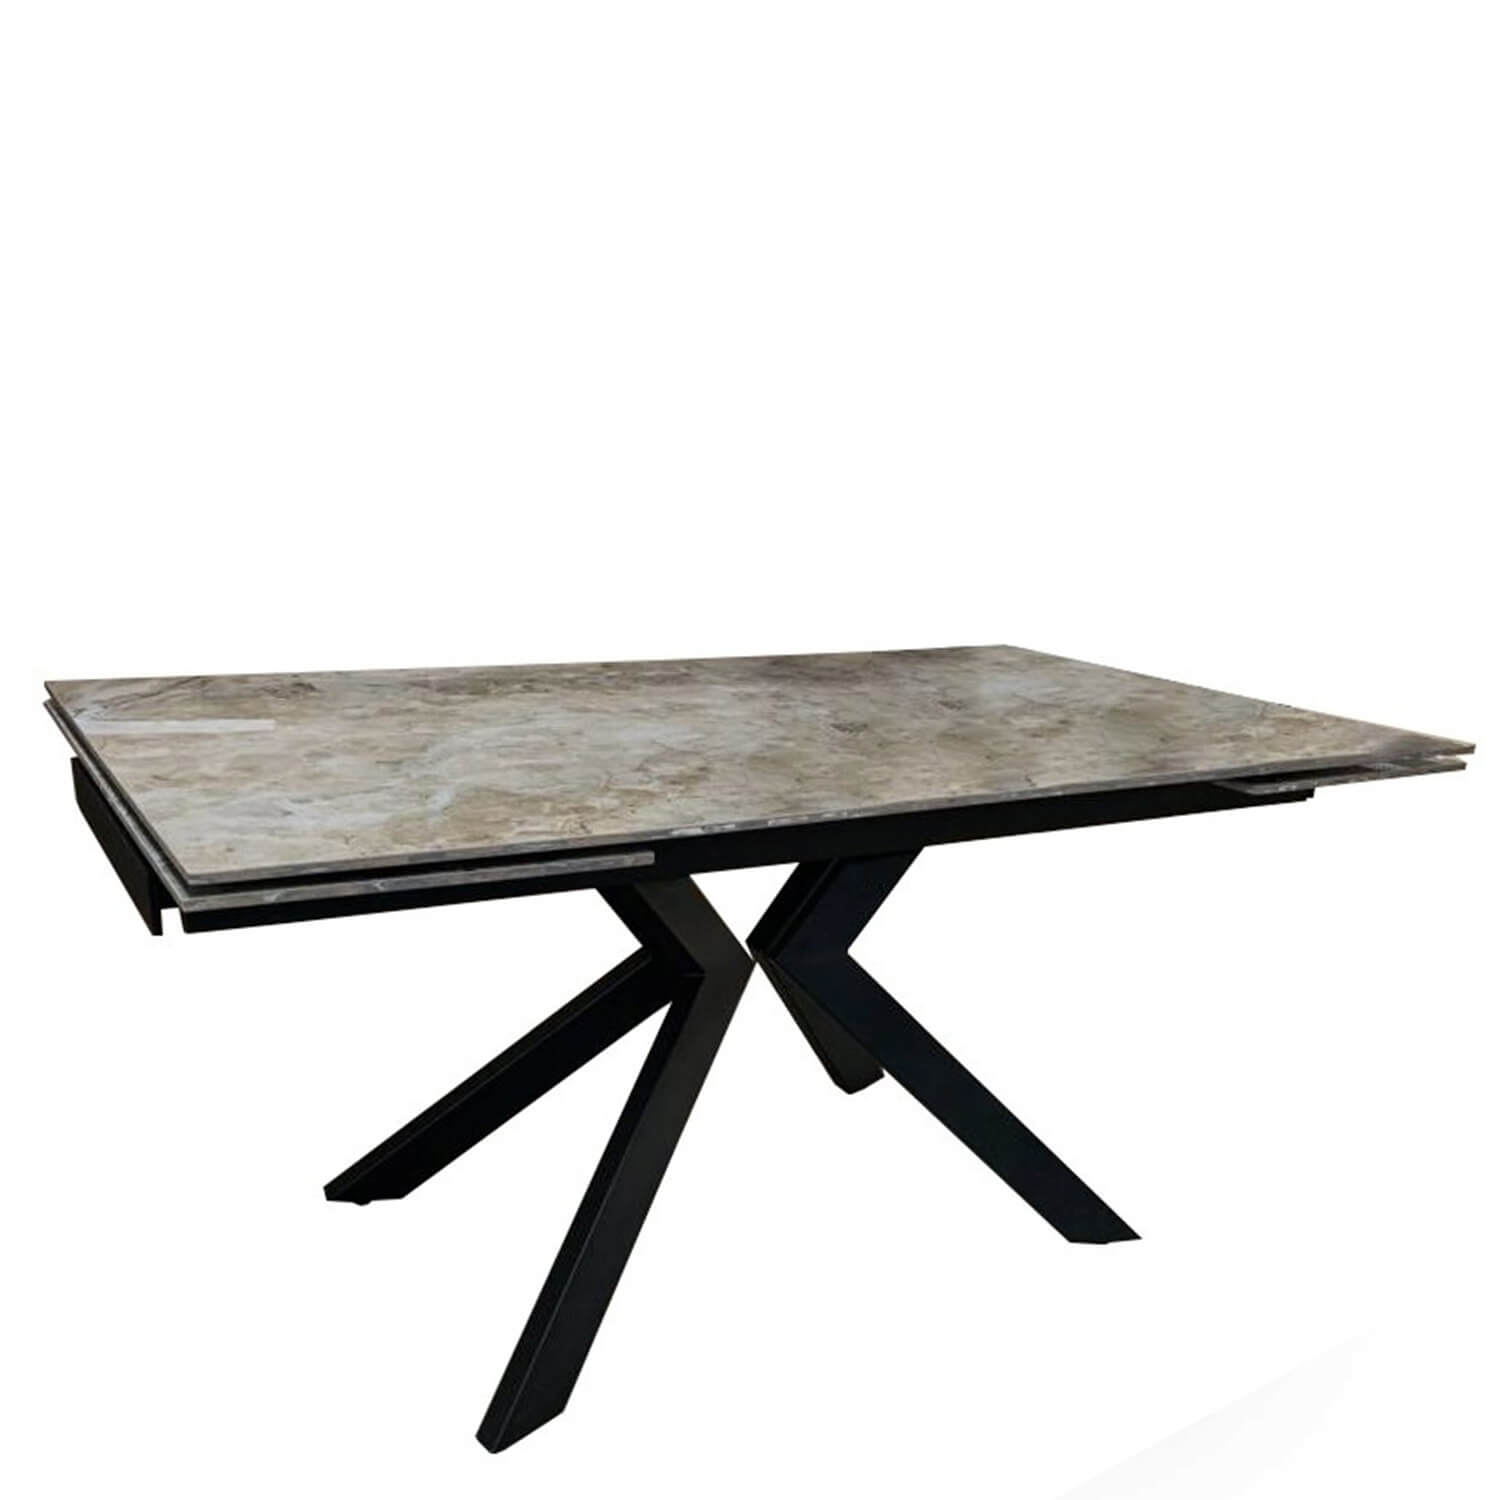 Dantoni extension dining table